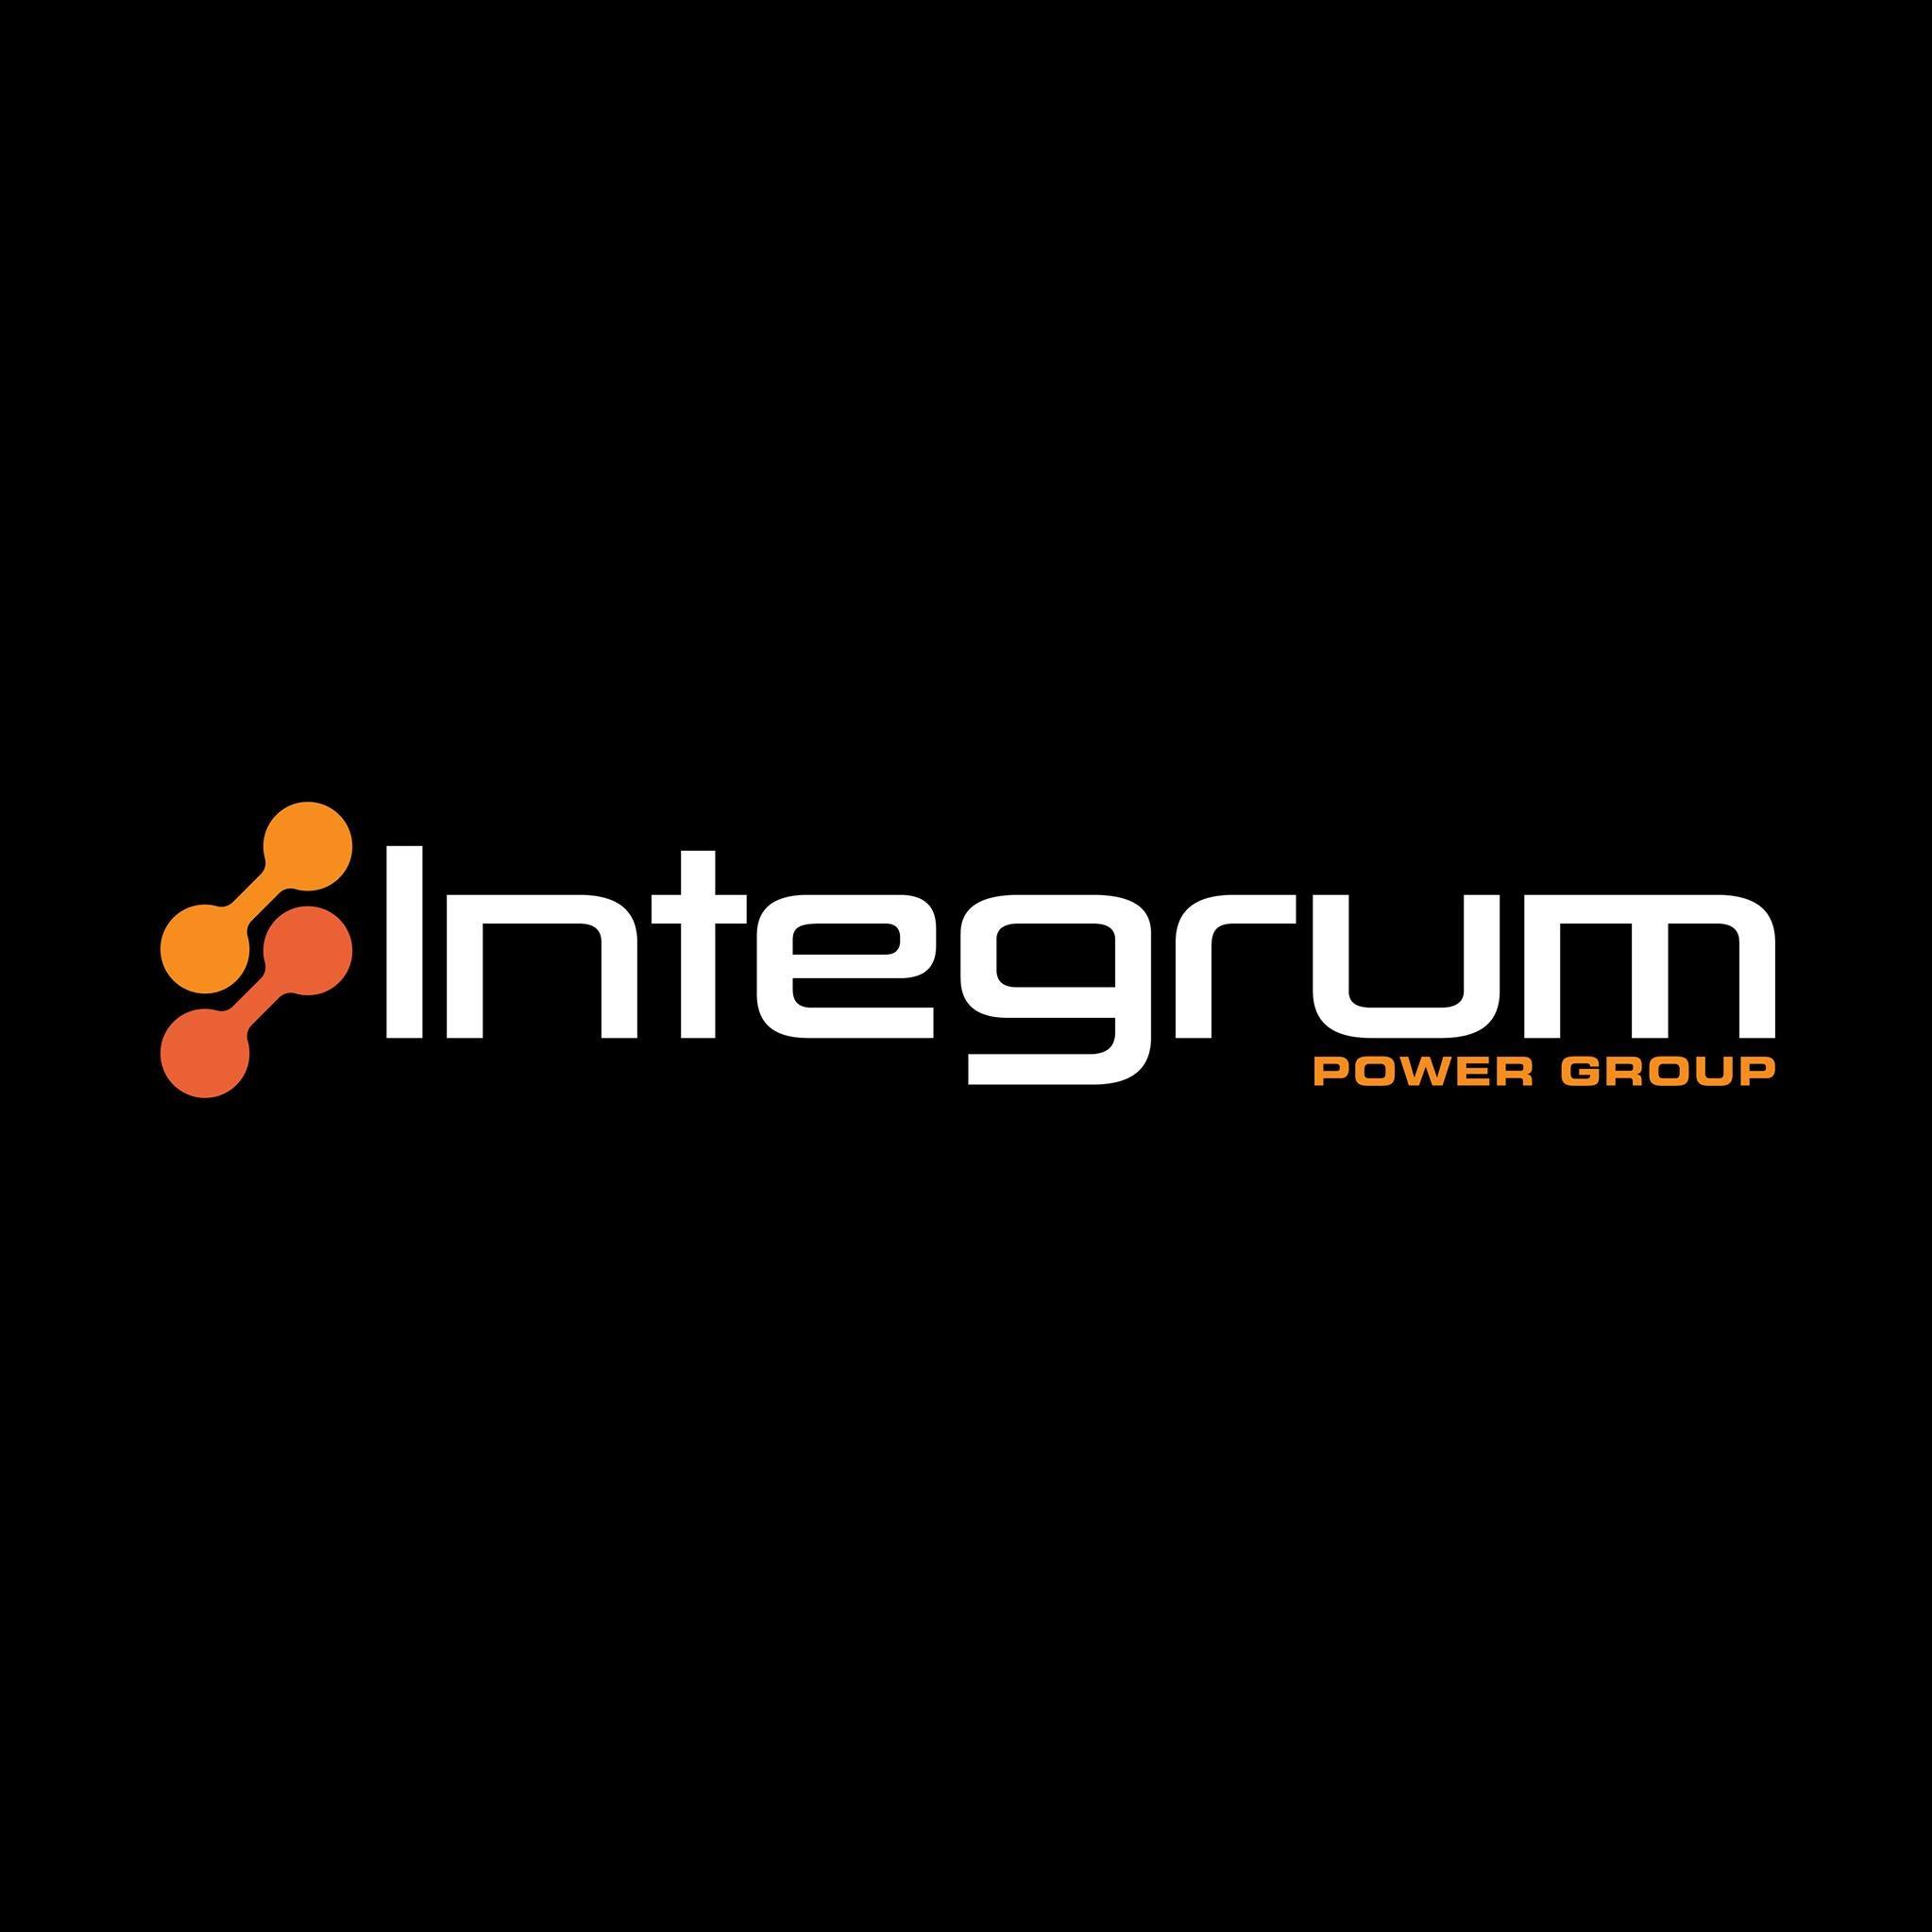 Integrum Power Group